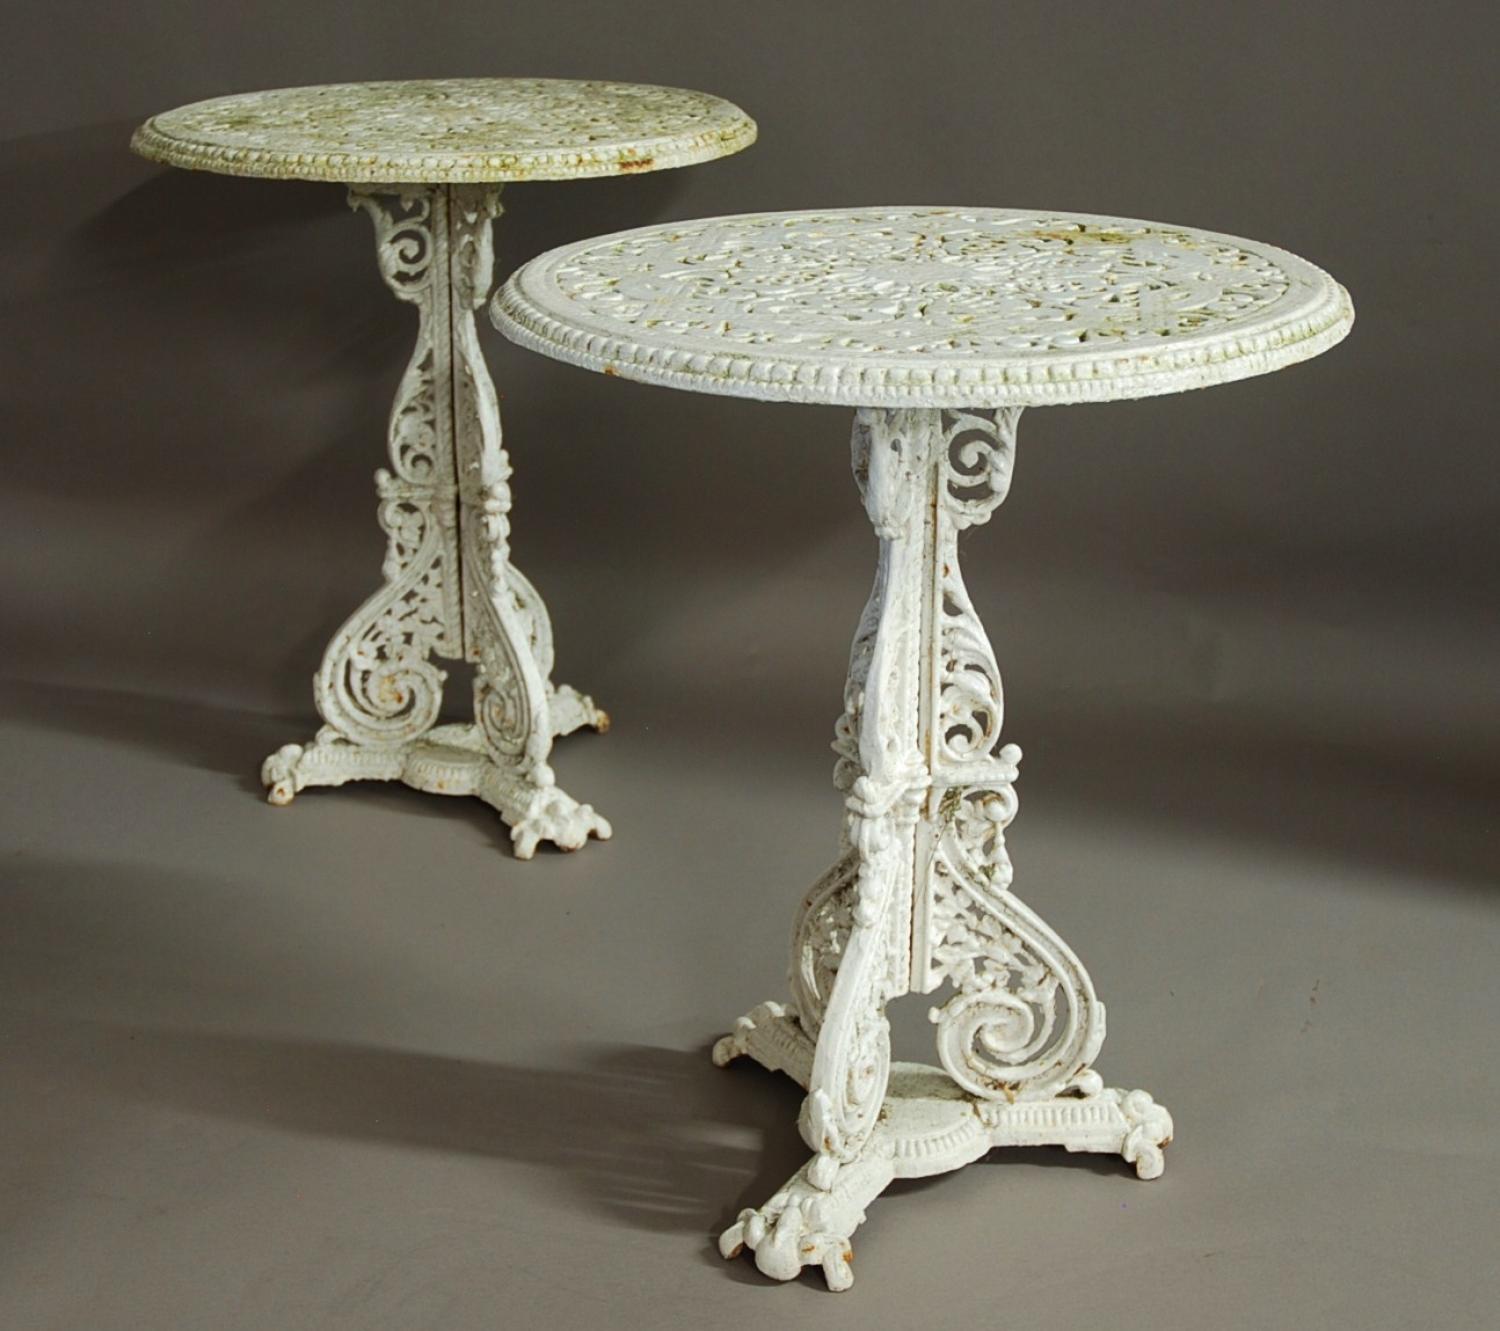 Rare pair of Coalbrookdale garden tables